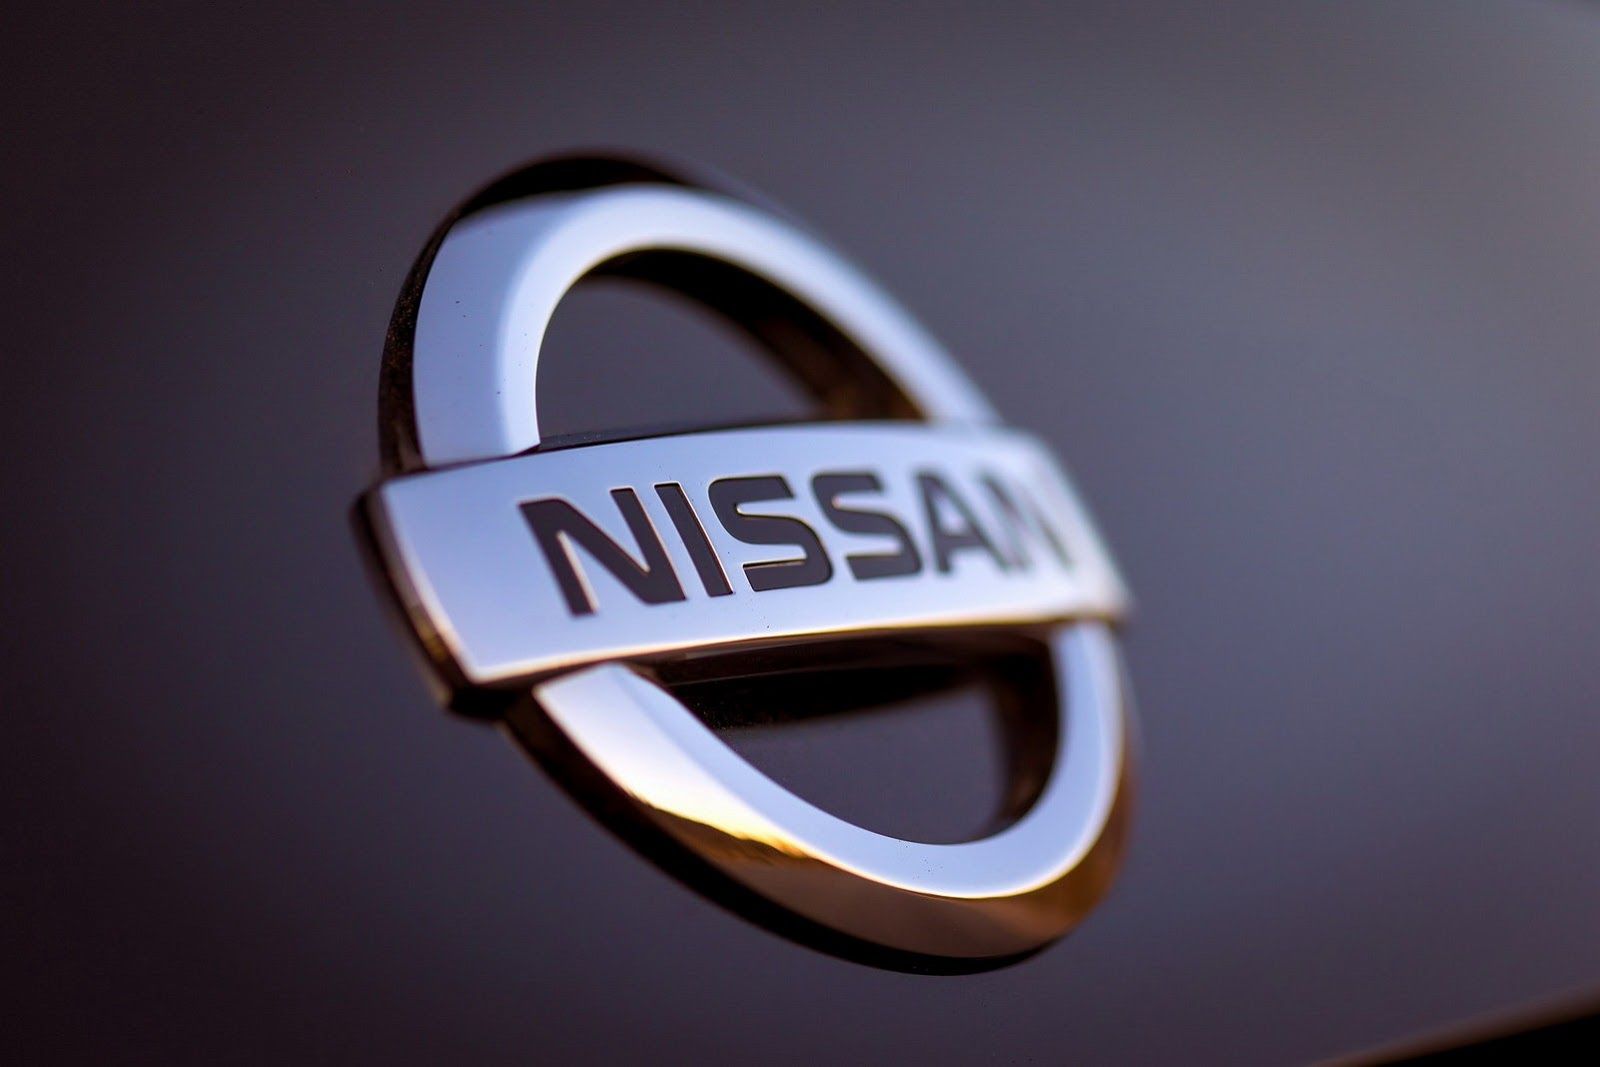 Nissan Logo Wallpapers - Wallpaper Cave